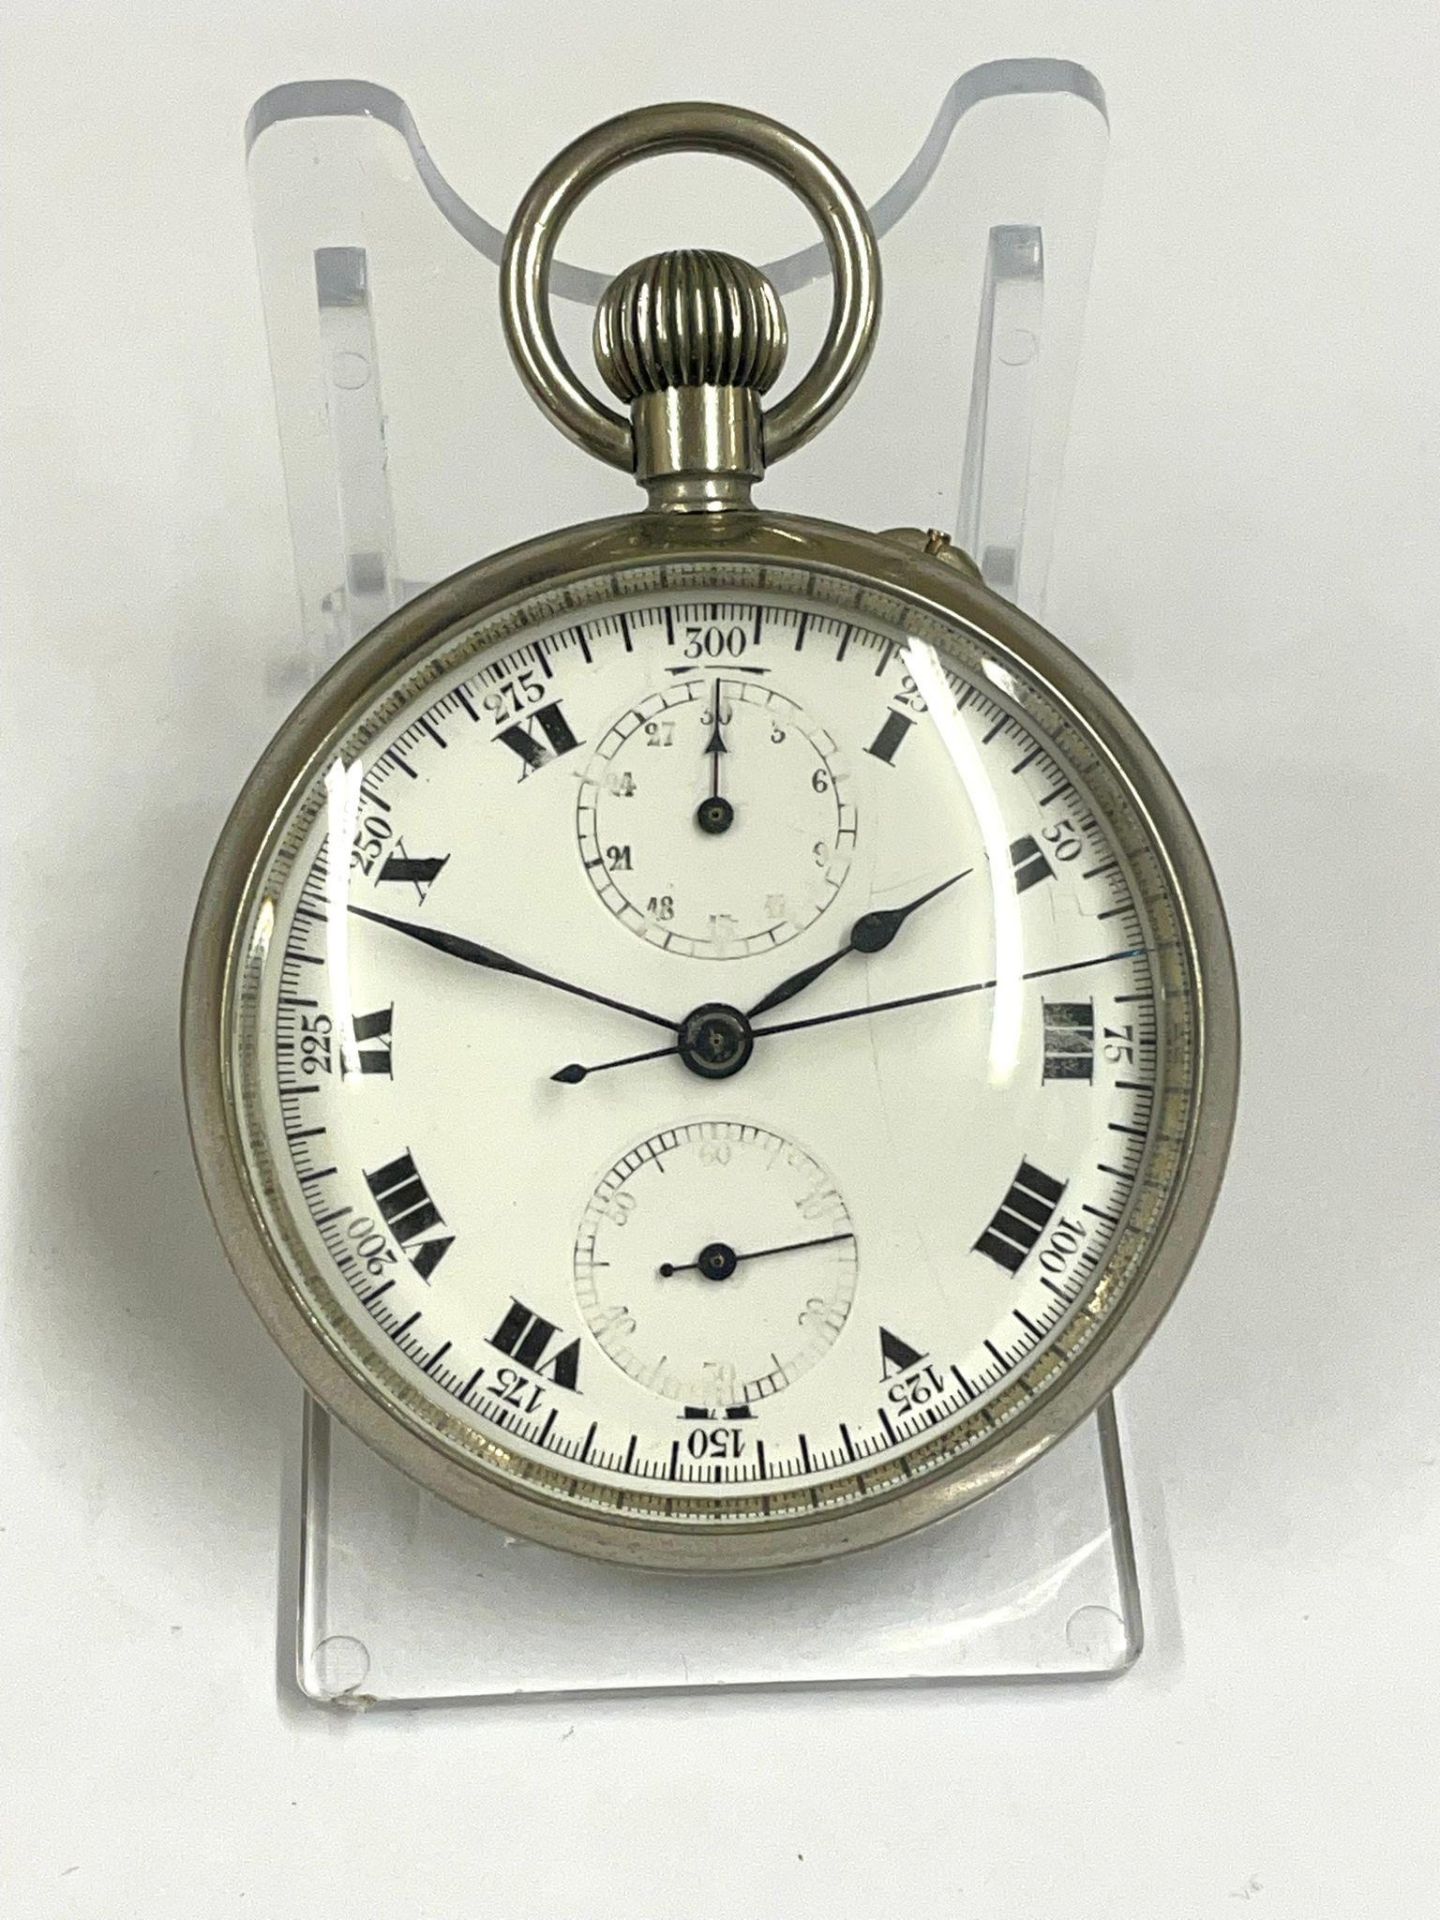 Vintage chronograph pocket watch working but no guarantees